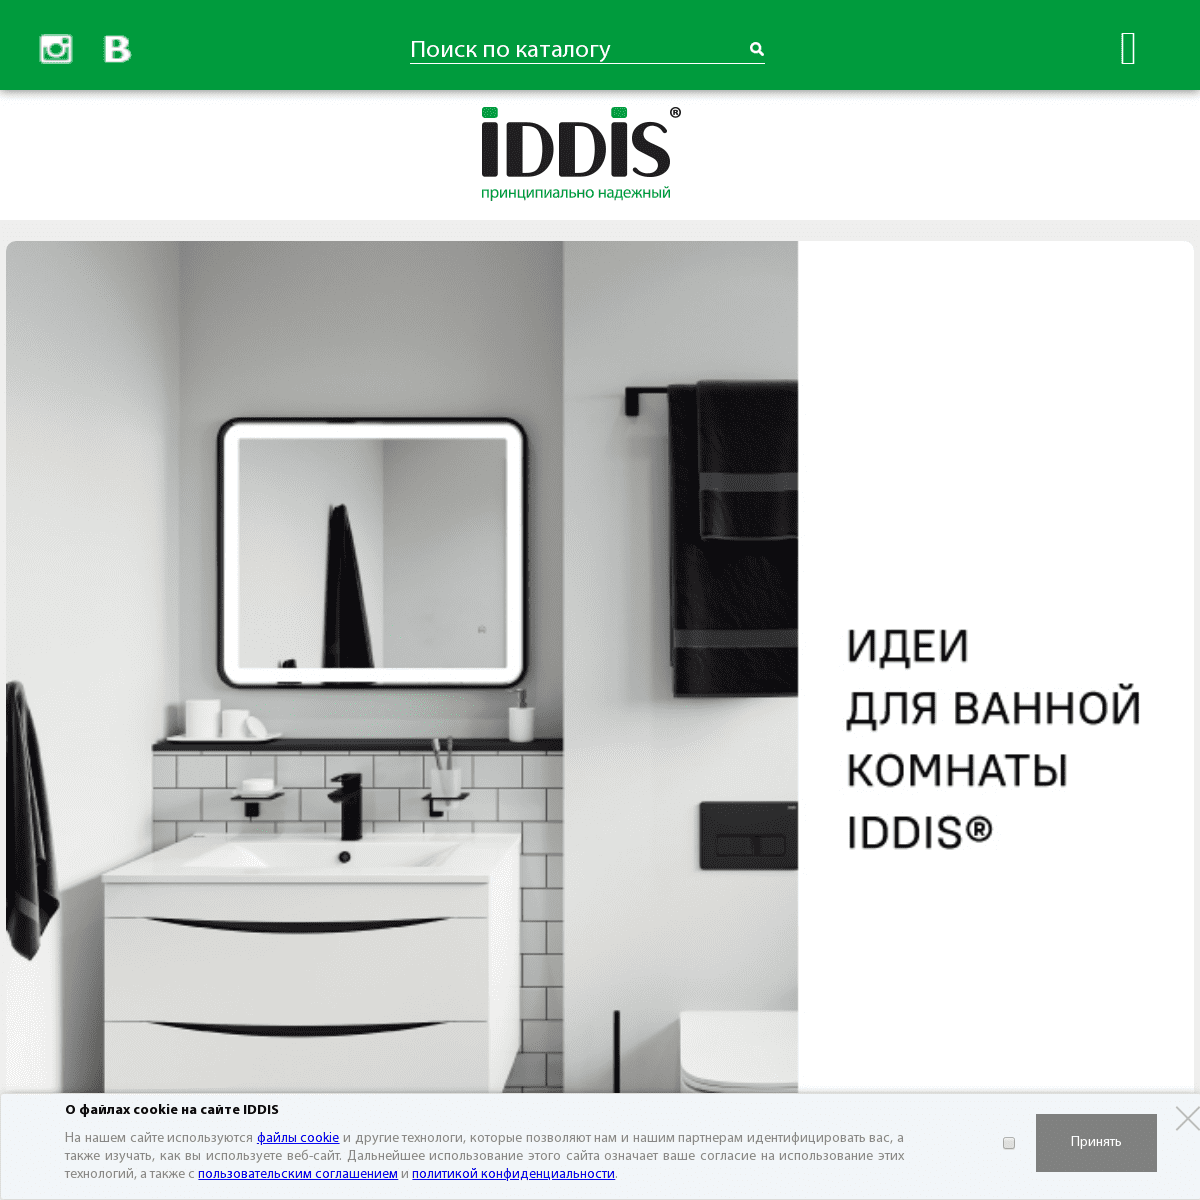 A complete backup of iddis.ru